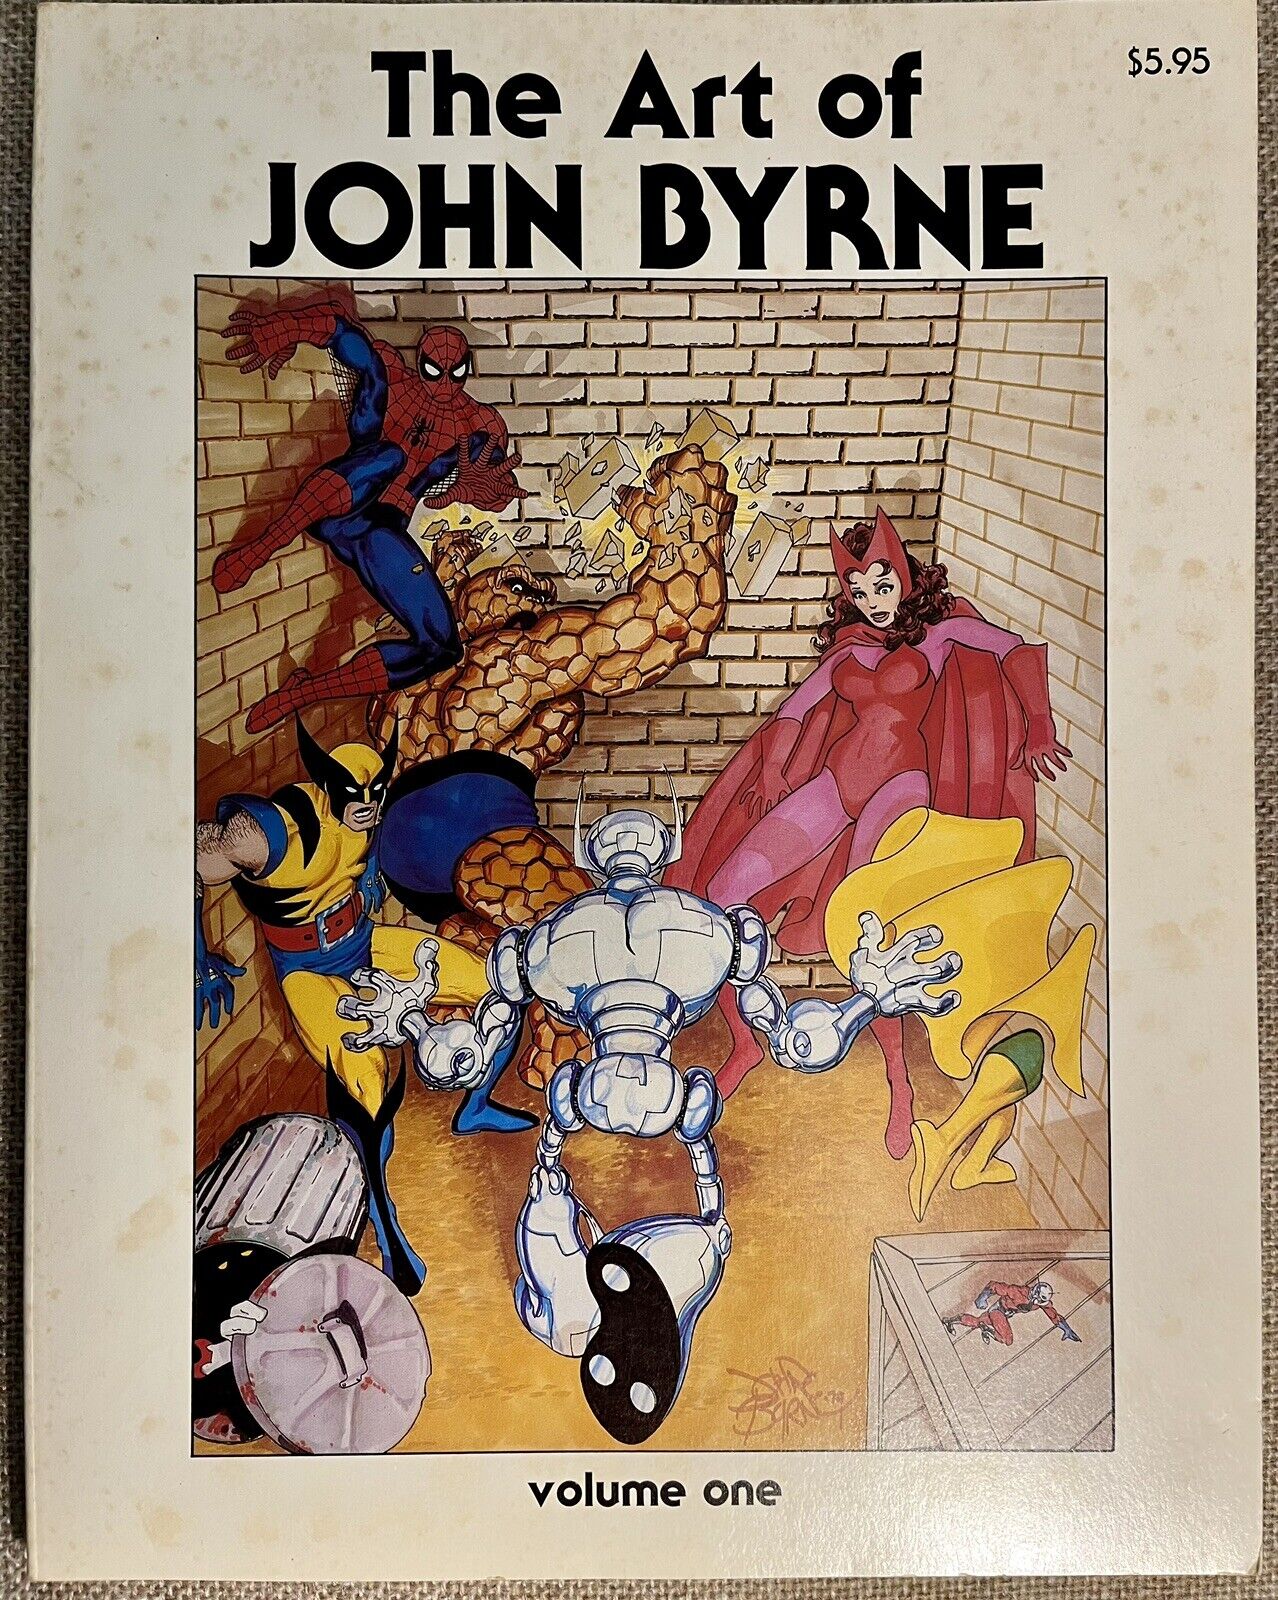 The Art of John Byrne #1 (S.Q. Productions Inc. 1980)